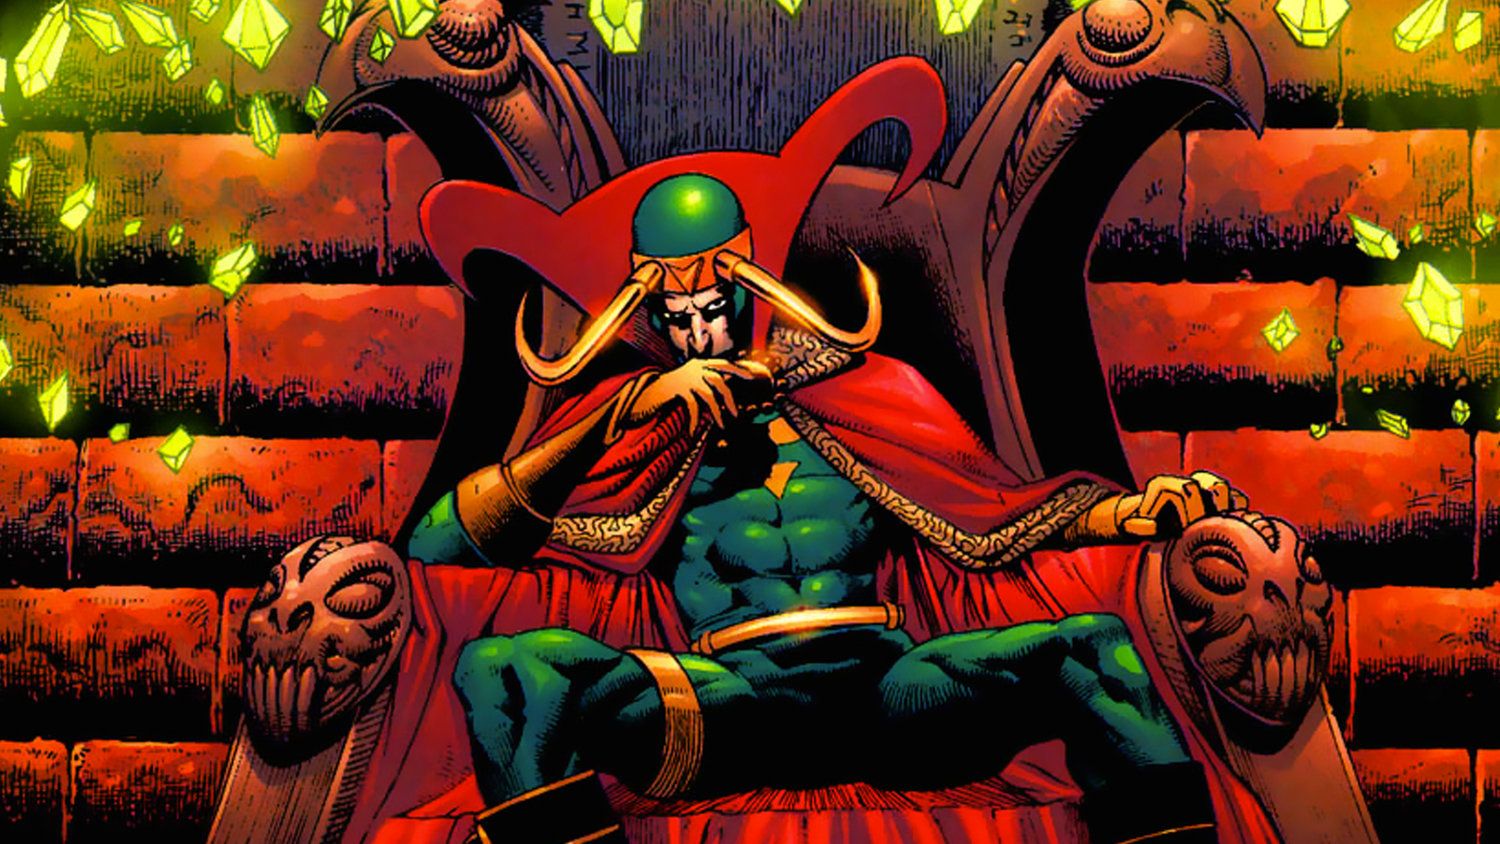 The New Sorcerer Supreme in Marvel Comics is. Loki?